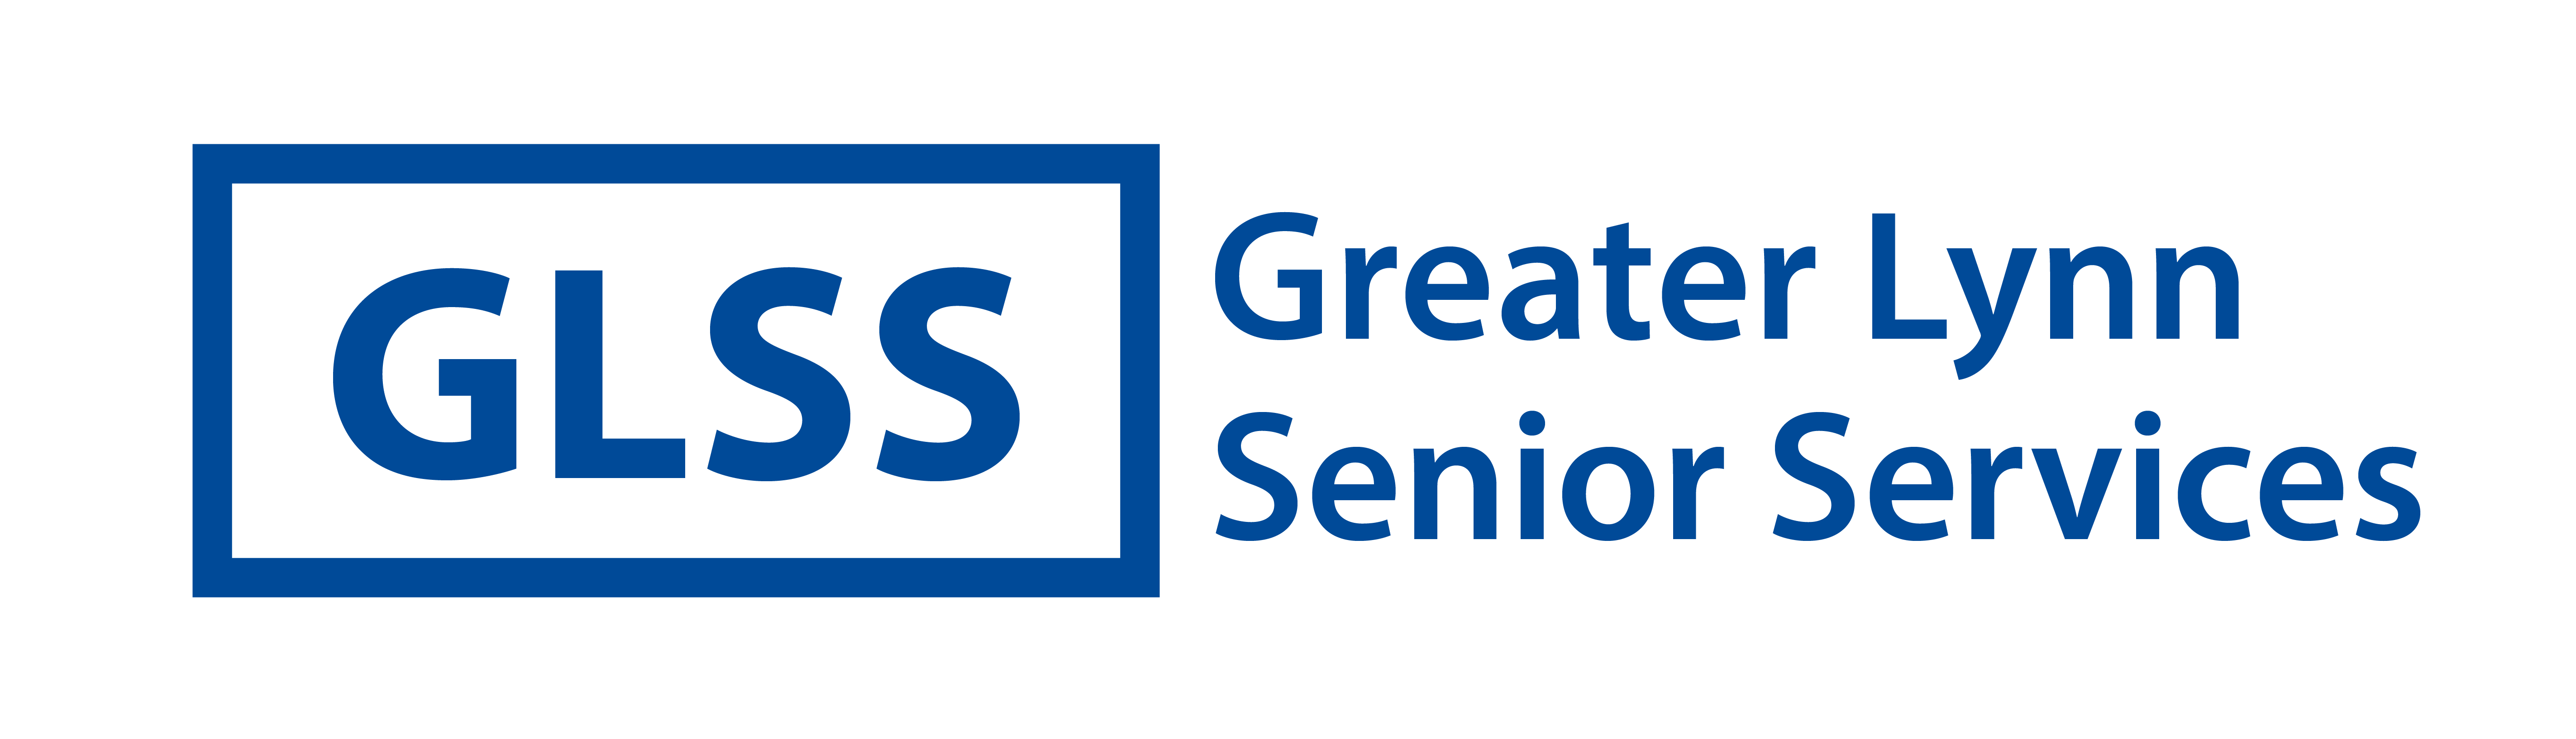 Greater Lynn Senior Services logo